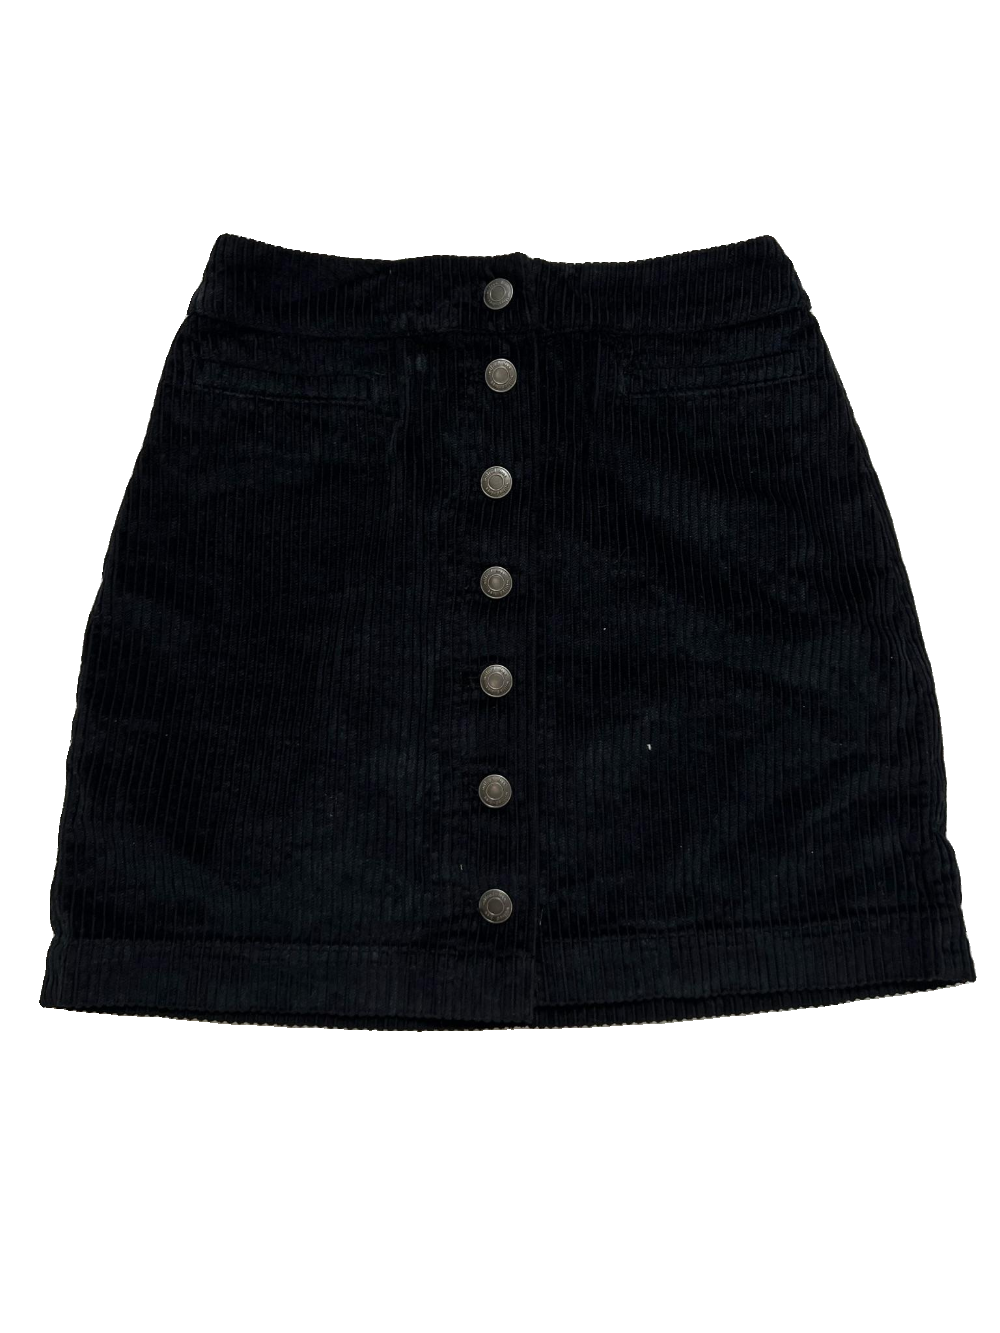 Wilfred Free - Black Corduroy Skirt